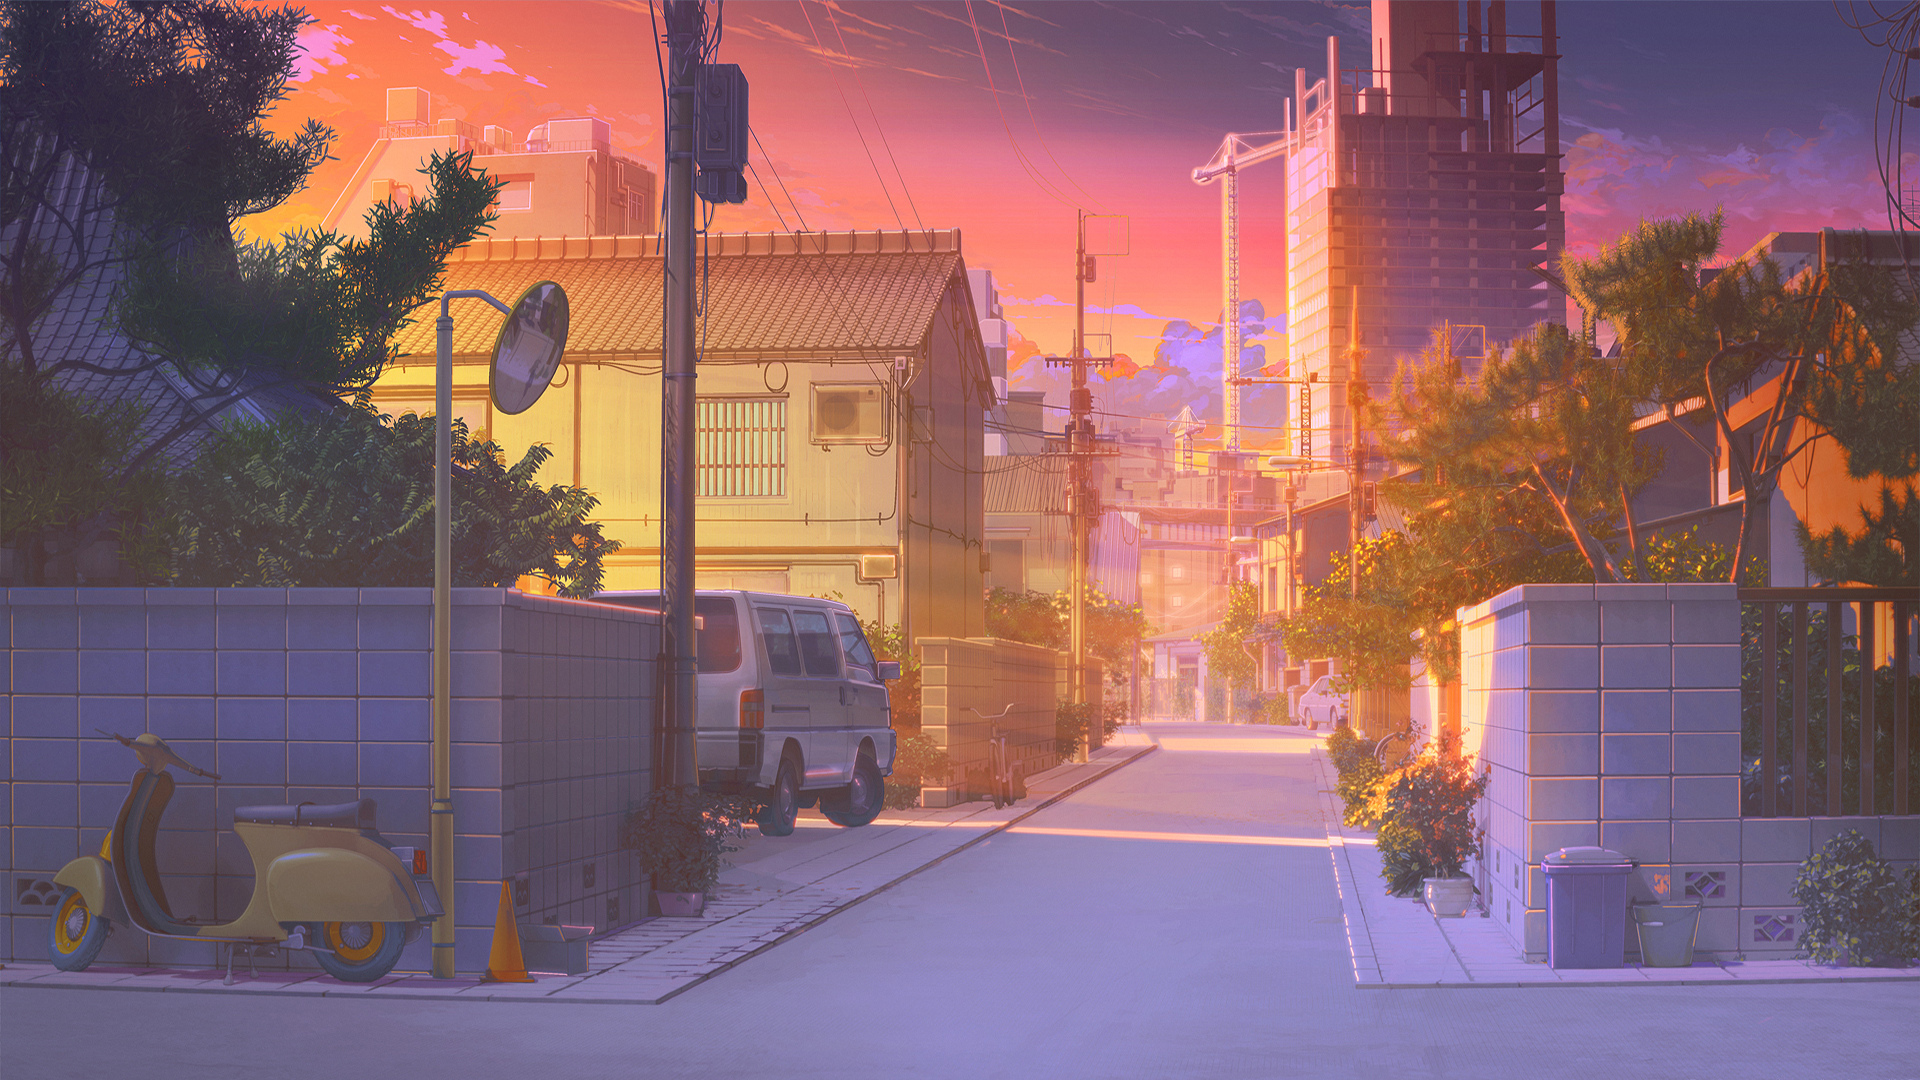 Background Art Anime Landscape Street Sky Clouds Light Effects Sunlight Building Scooters ArseniXC L 1920x1080